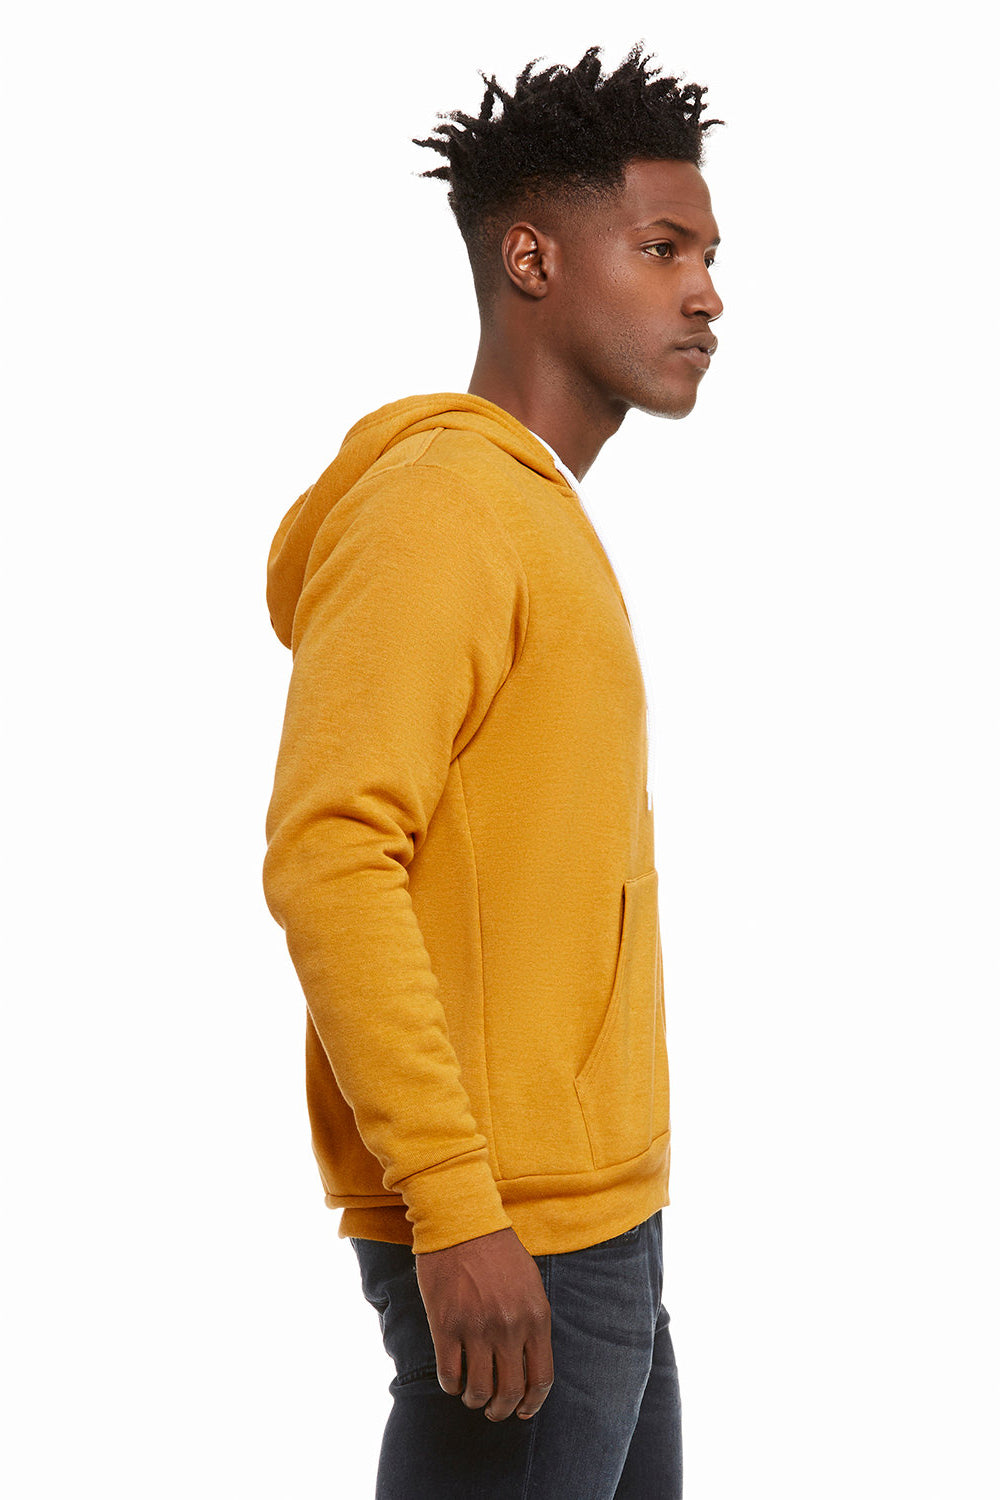 Bella + Canvas BC3739/3739 Mens Fleece Full Zip Hooded Sweatshirt Hoodie Heather Mustard Yellow Model Side